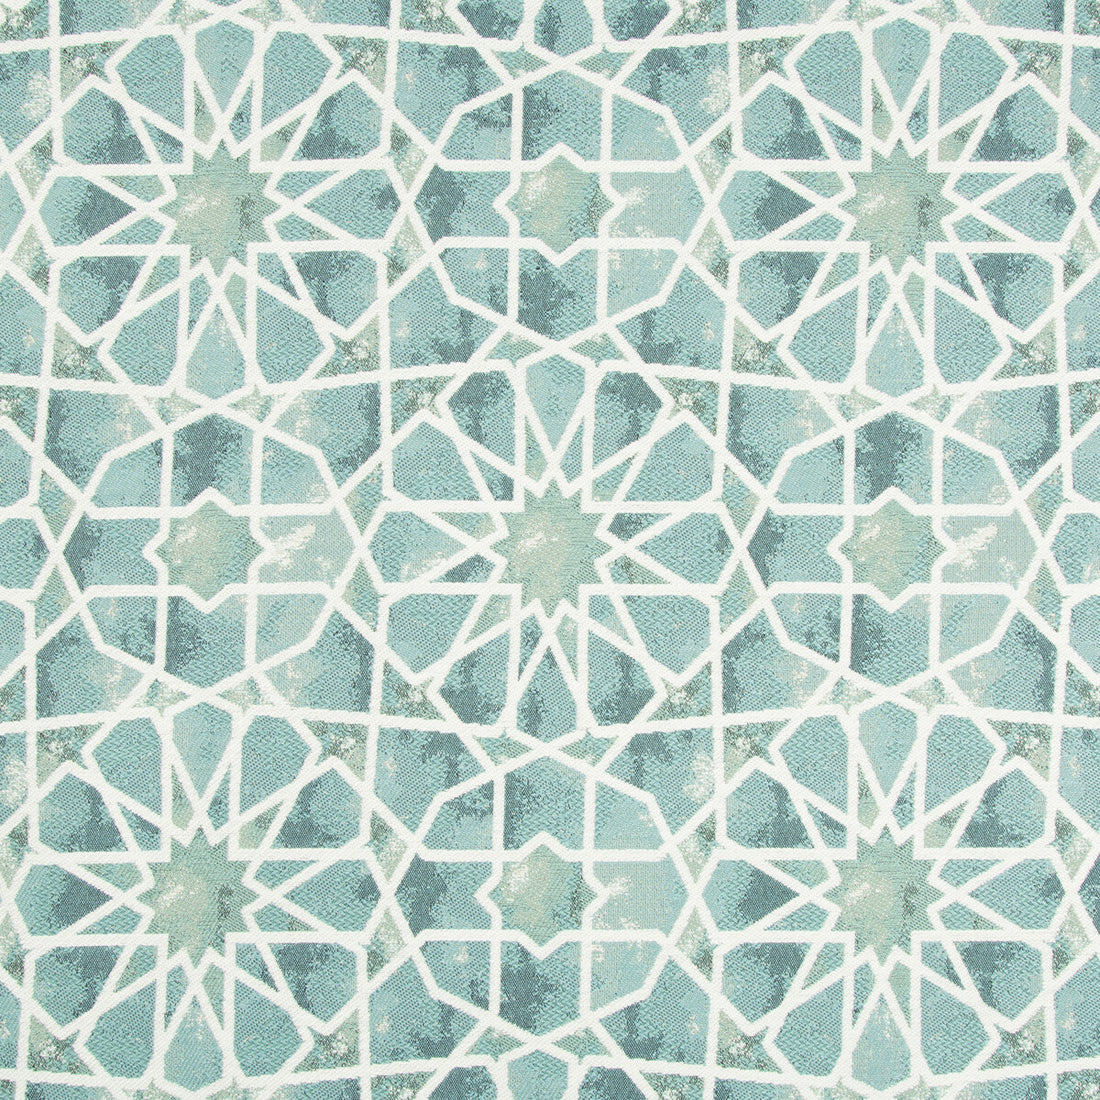 Kravet Design fabric in 34722-35 color - pattern 34722.35.0 - by Kravet Design in the Gis collection